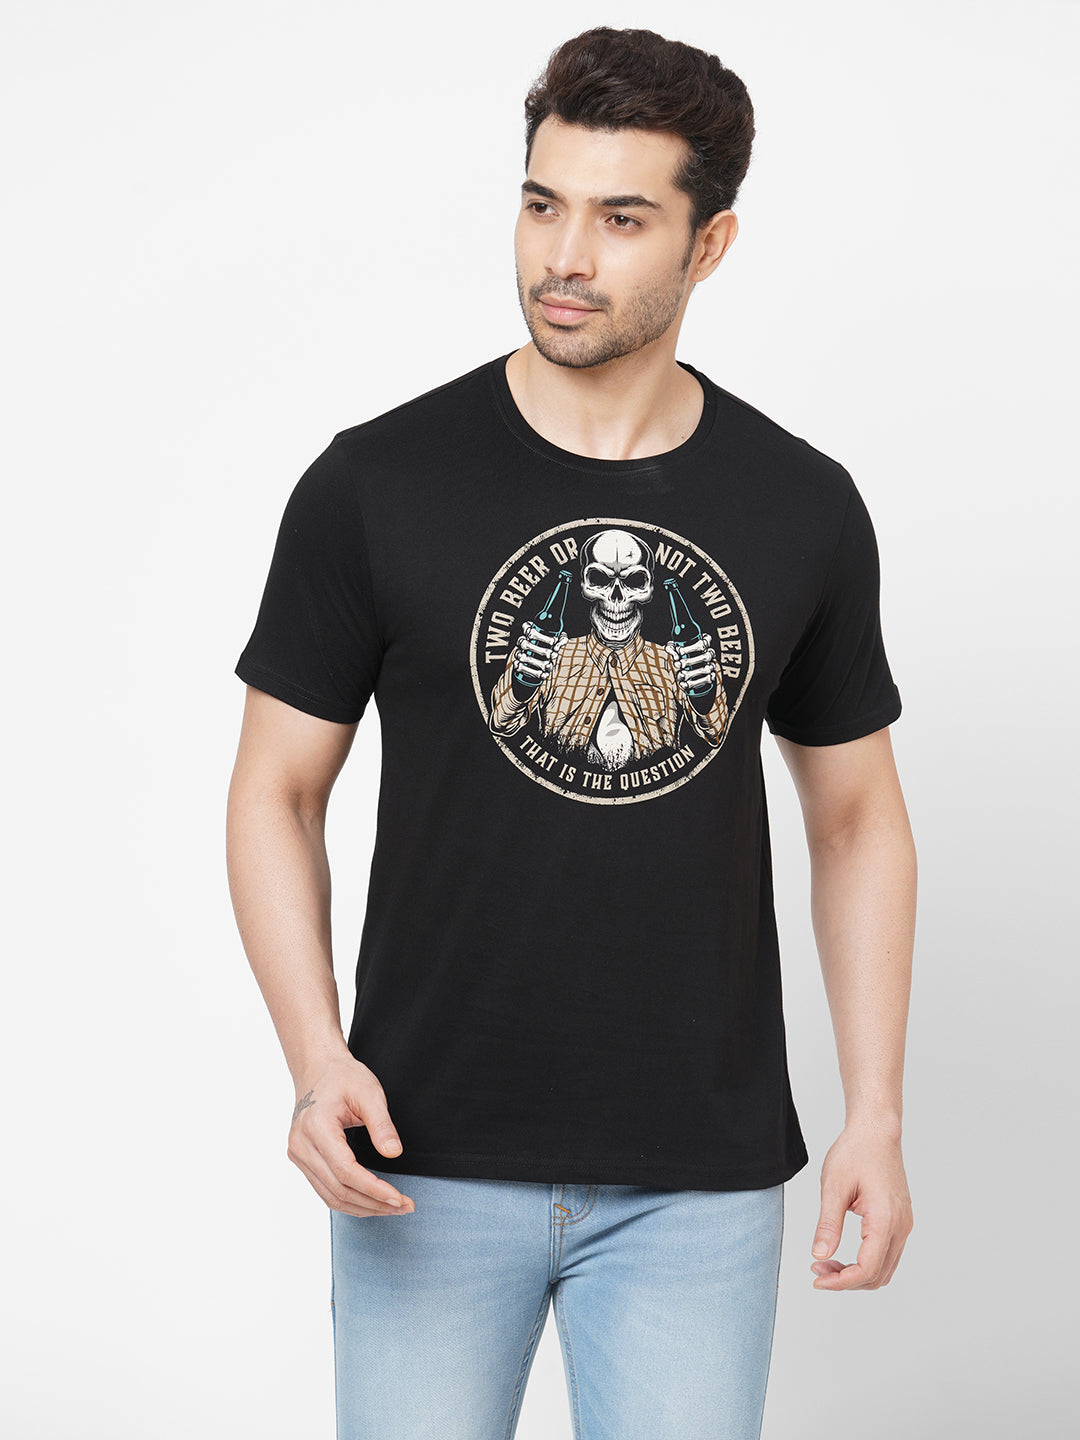 Men's Crew Neck Printed Tshirt Black Regular Fit